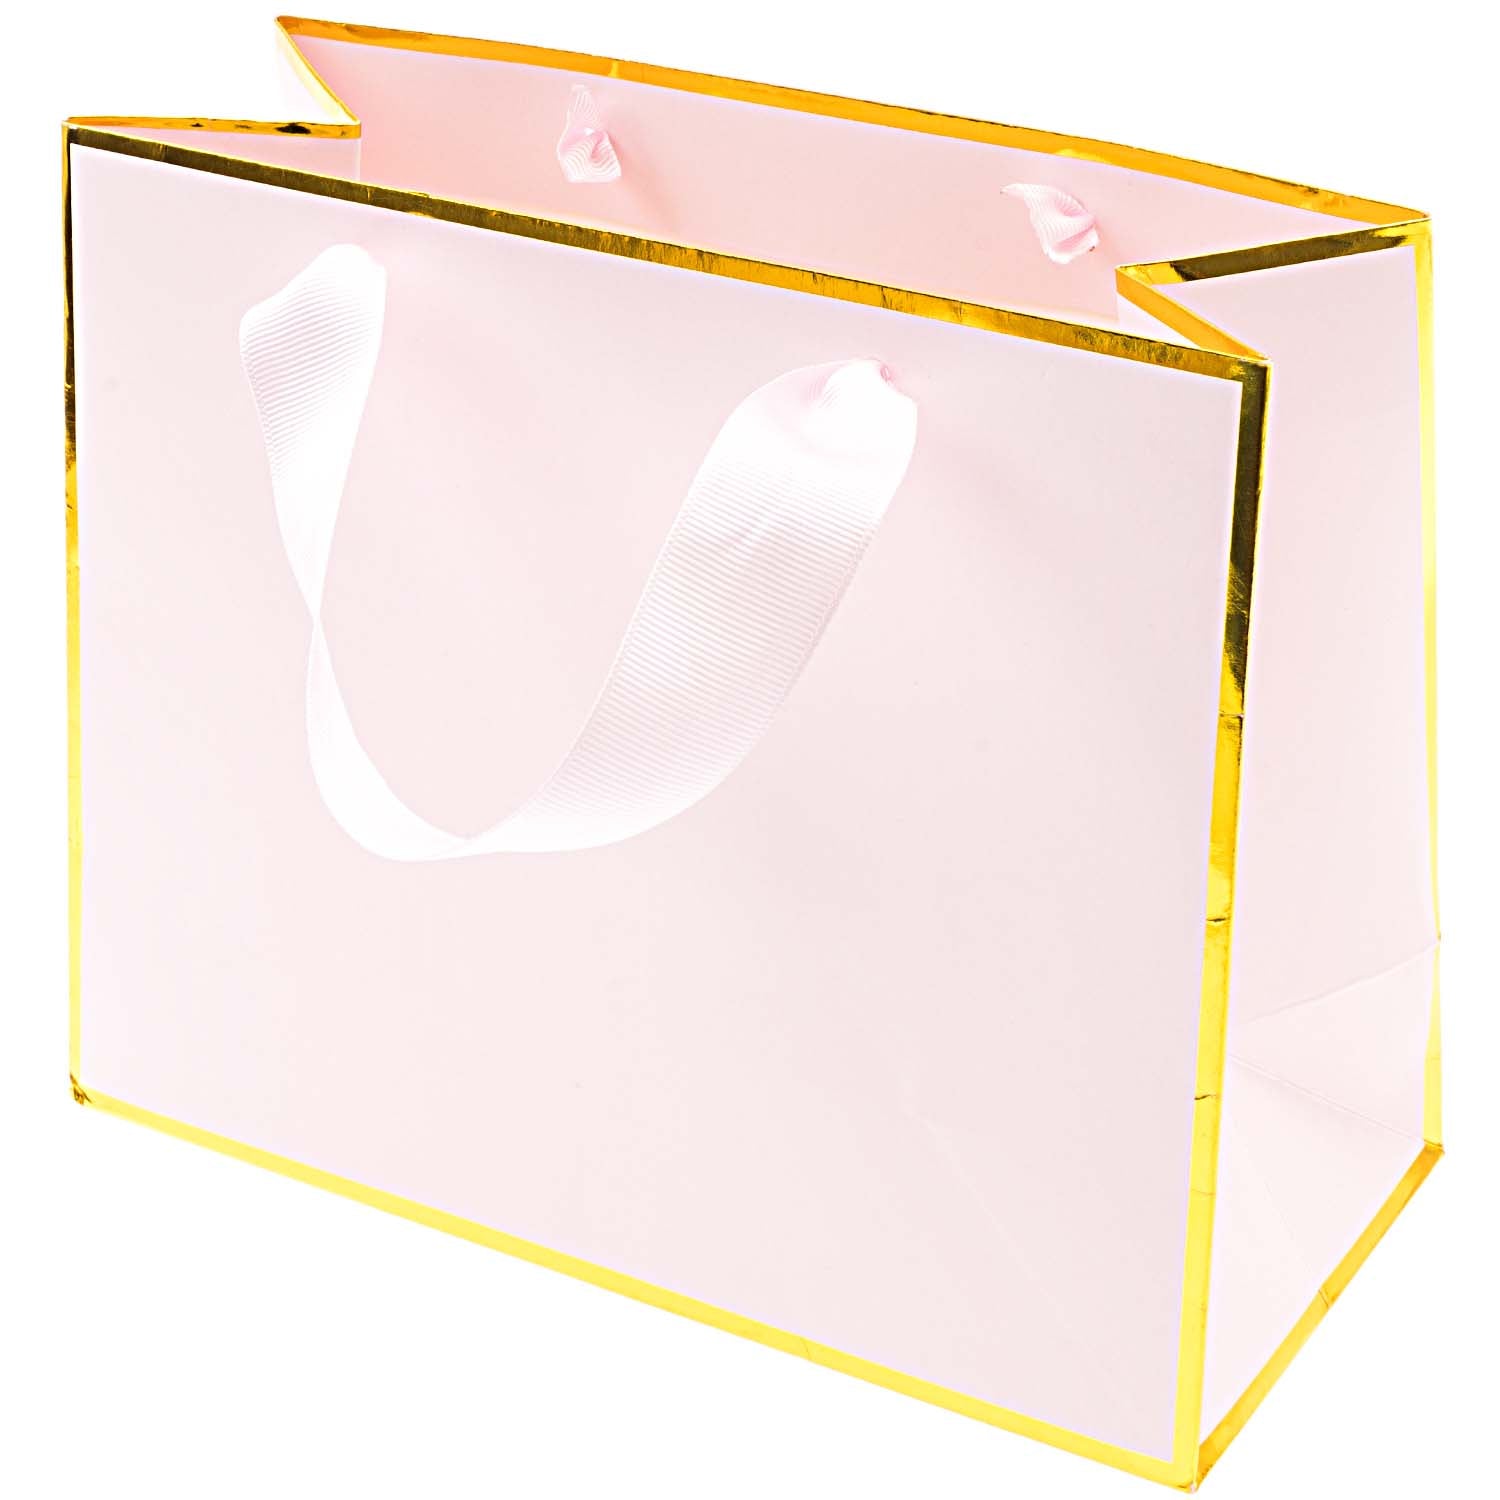 PINK & GOLD GIFT BAG  22x18cm